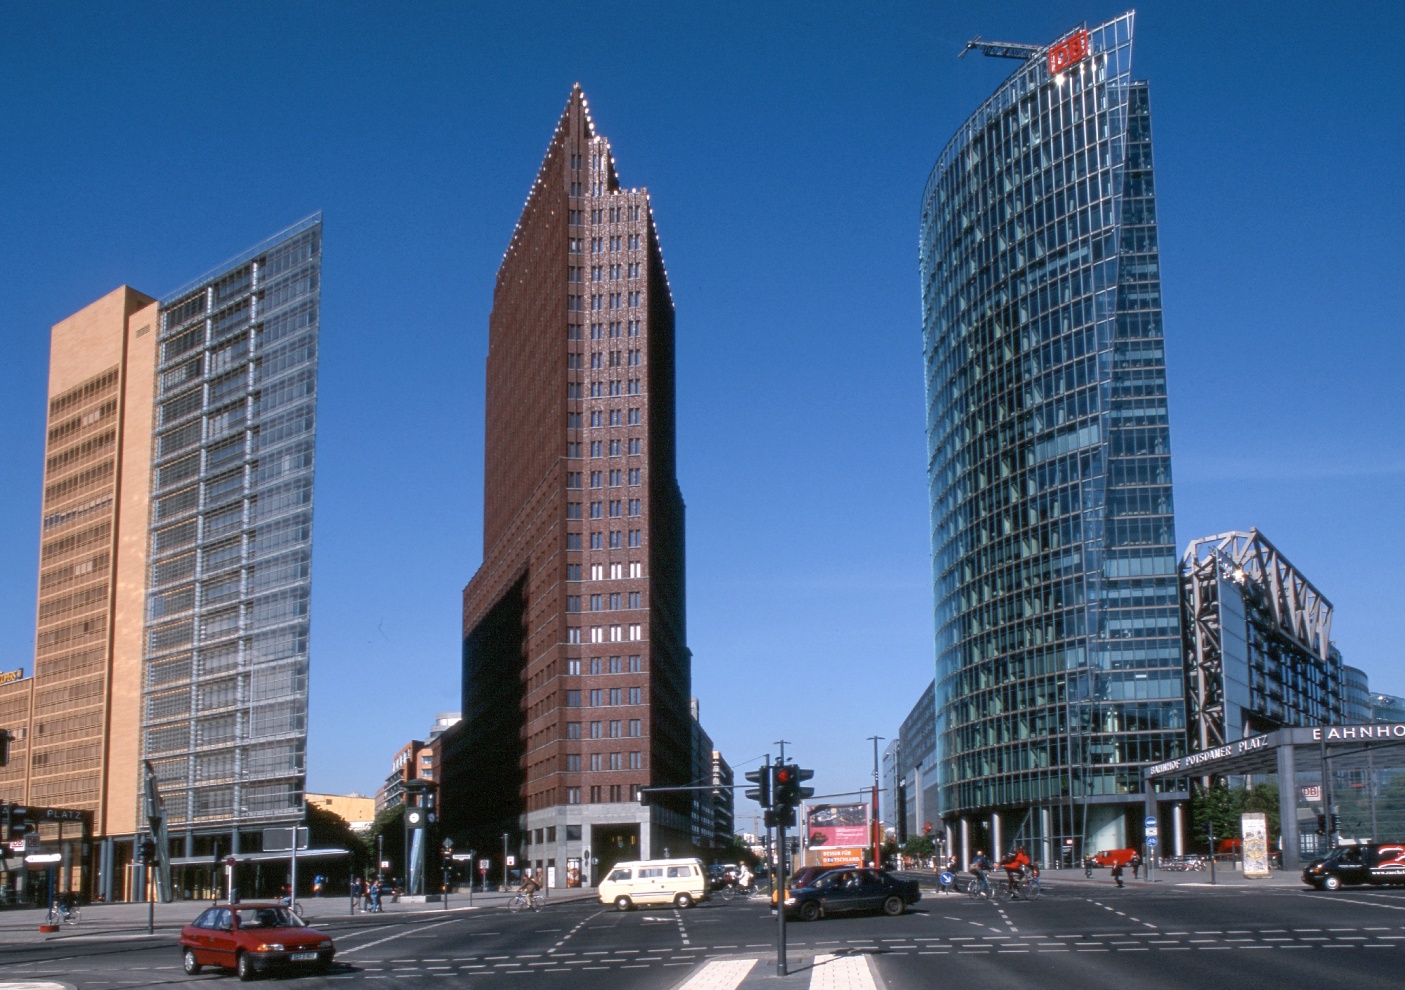 Berlin, Potsdamer Platz, skyscrapers by Renzo Piano (left) , H. Kollhoff and Helmut Jahn.